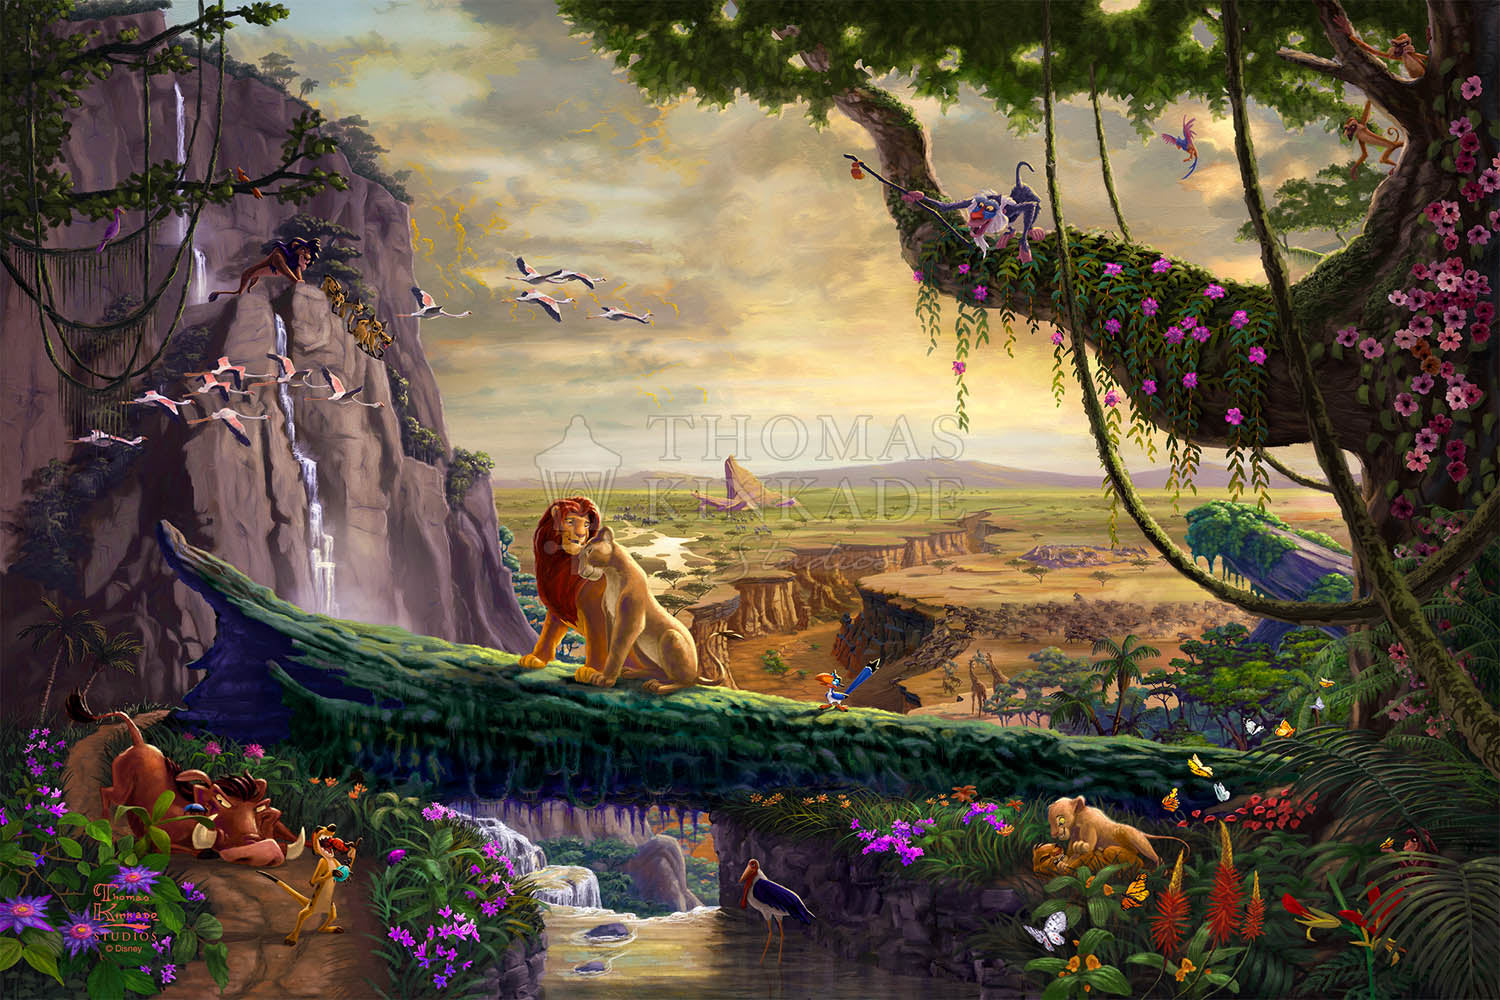 Thomas Kinkade Studios "Disney Lion King – Return to Pride Rock" Limited Edition Canvas Giclee